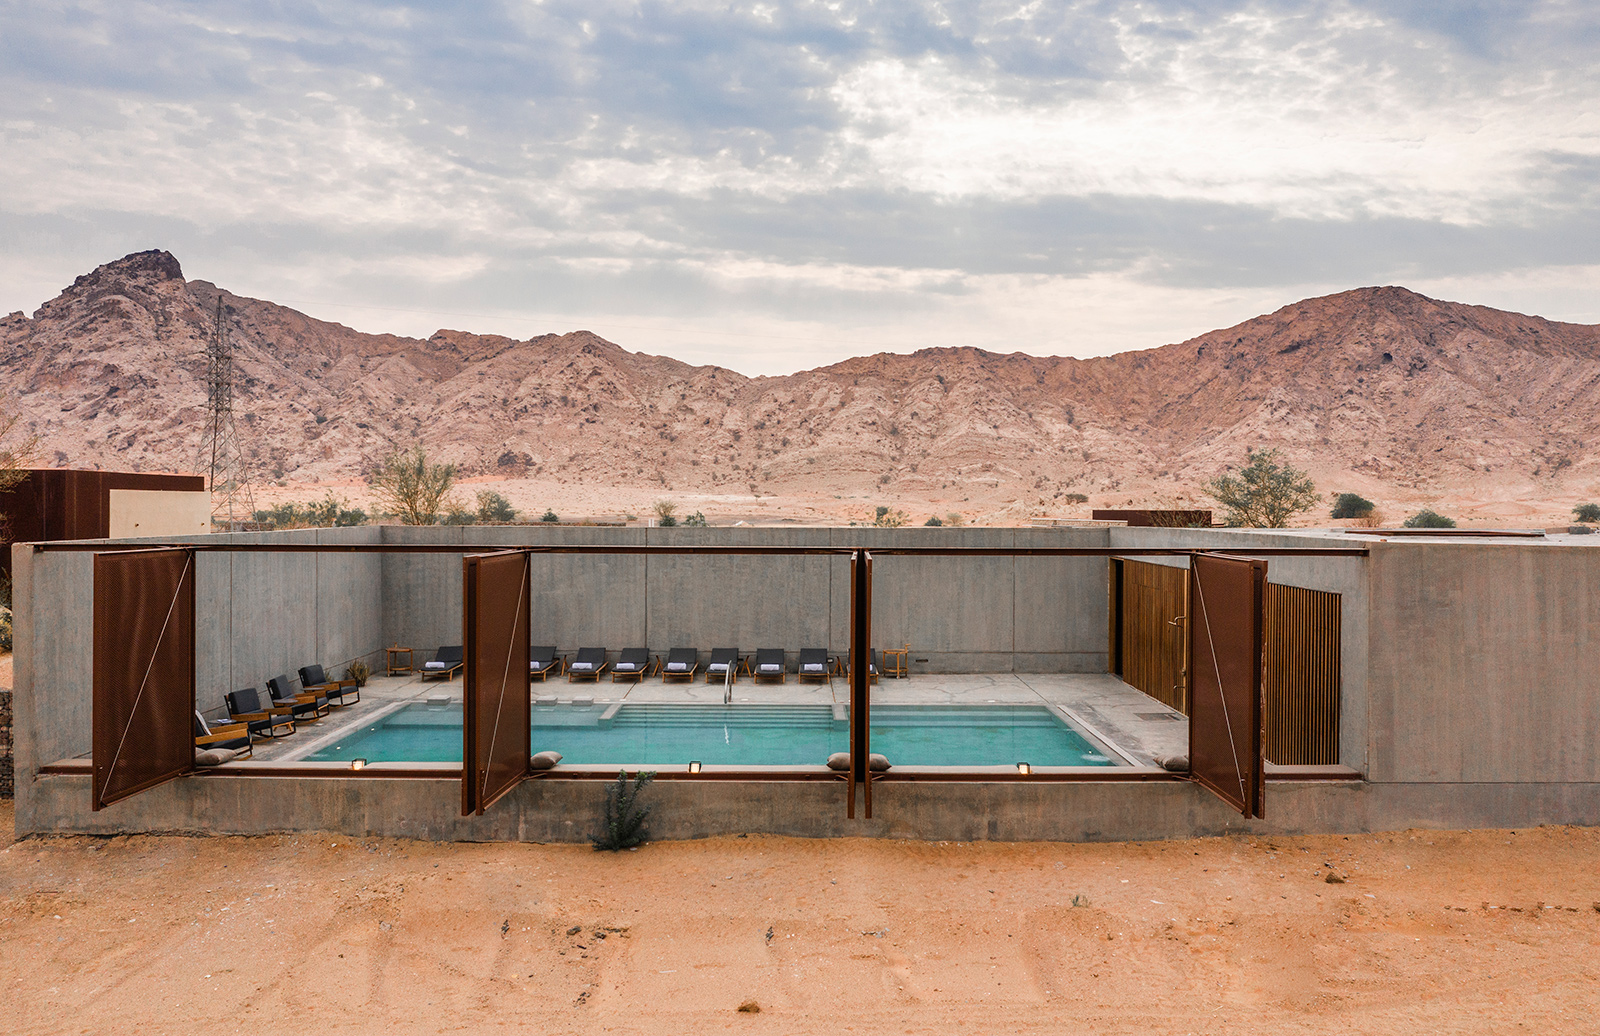 Al Faya Lodge - a minimalist spa in the desert